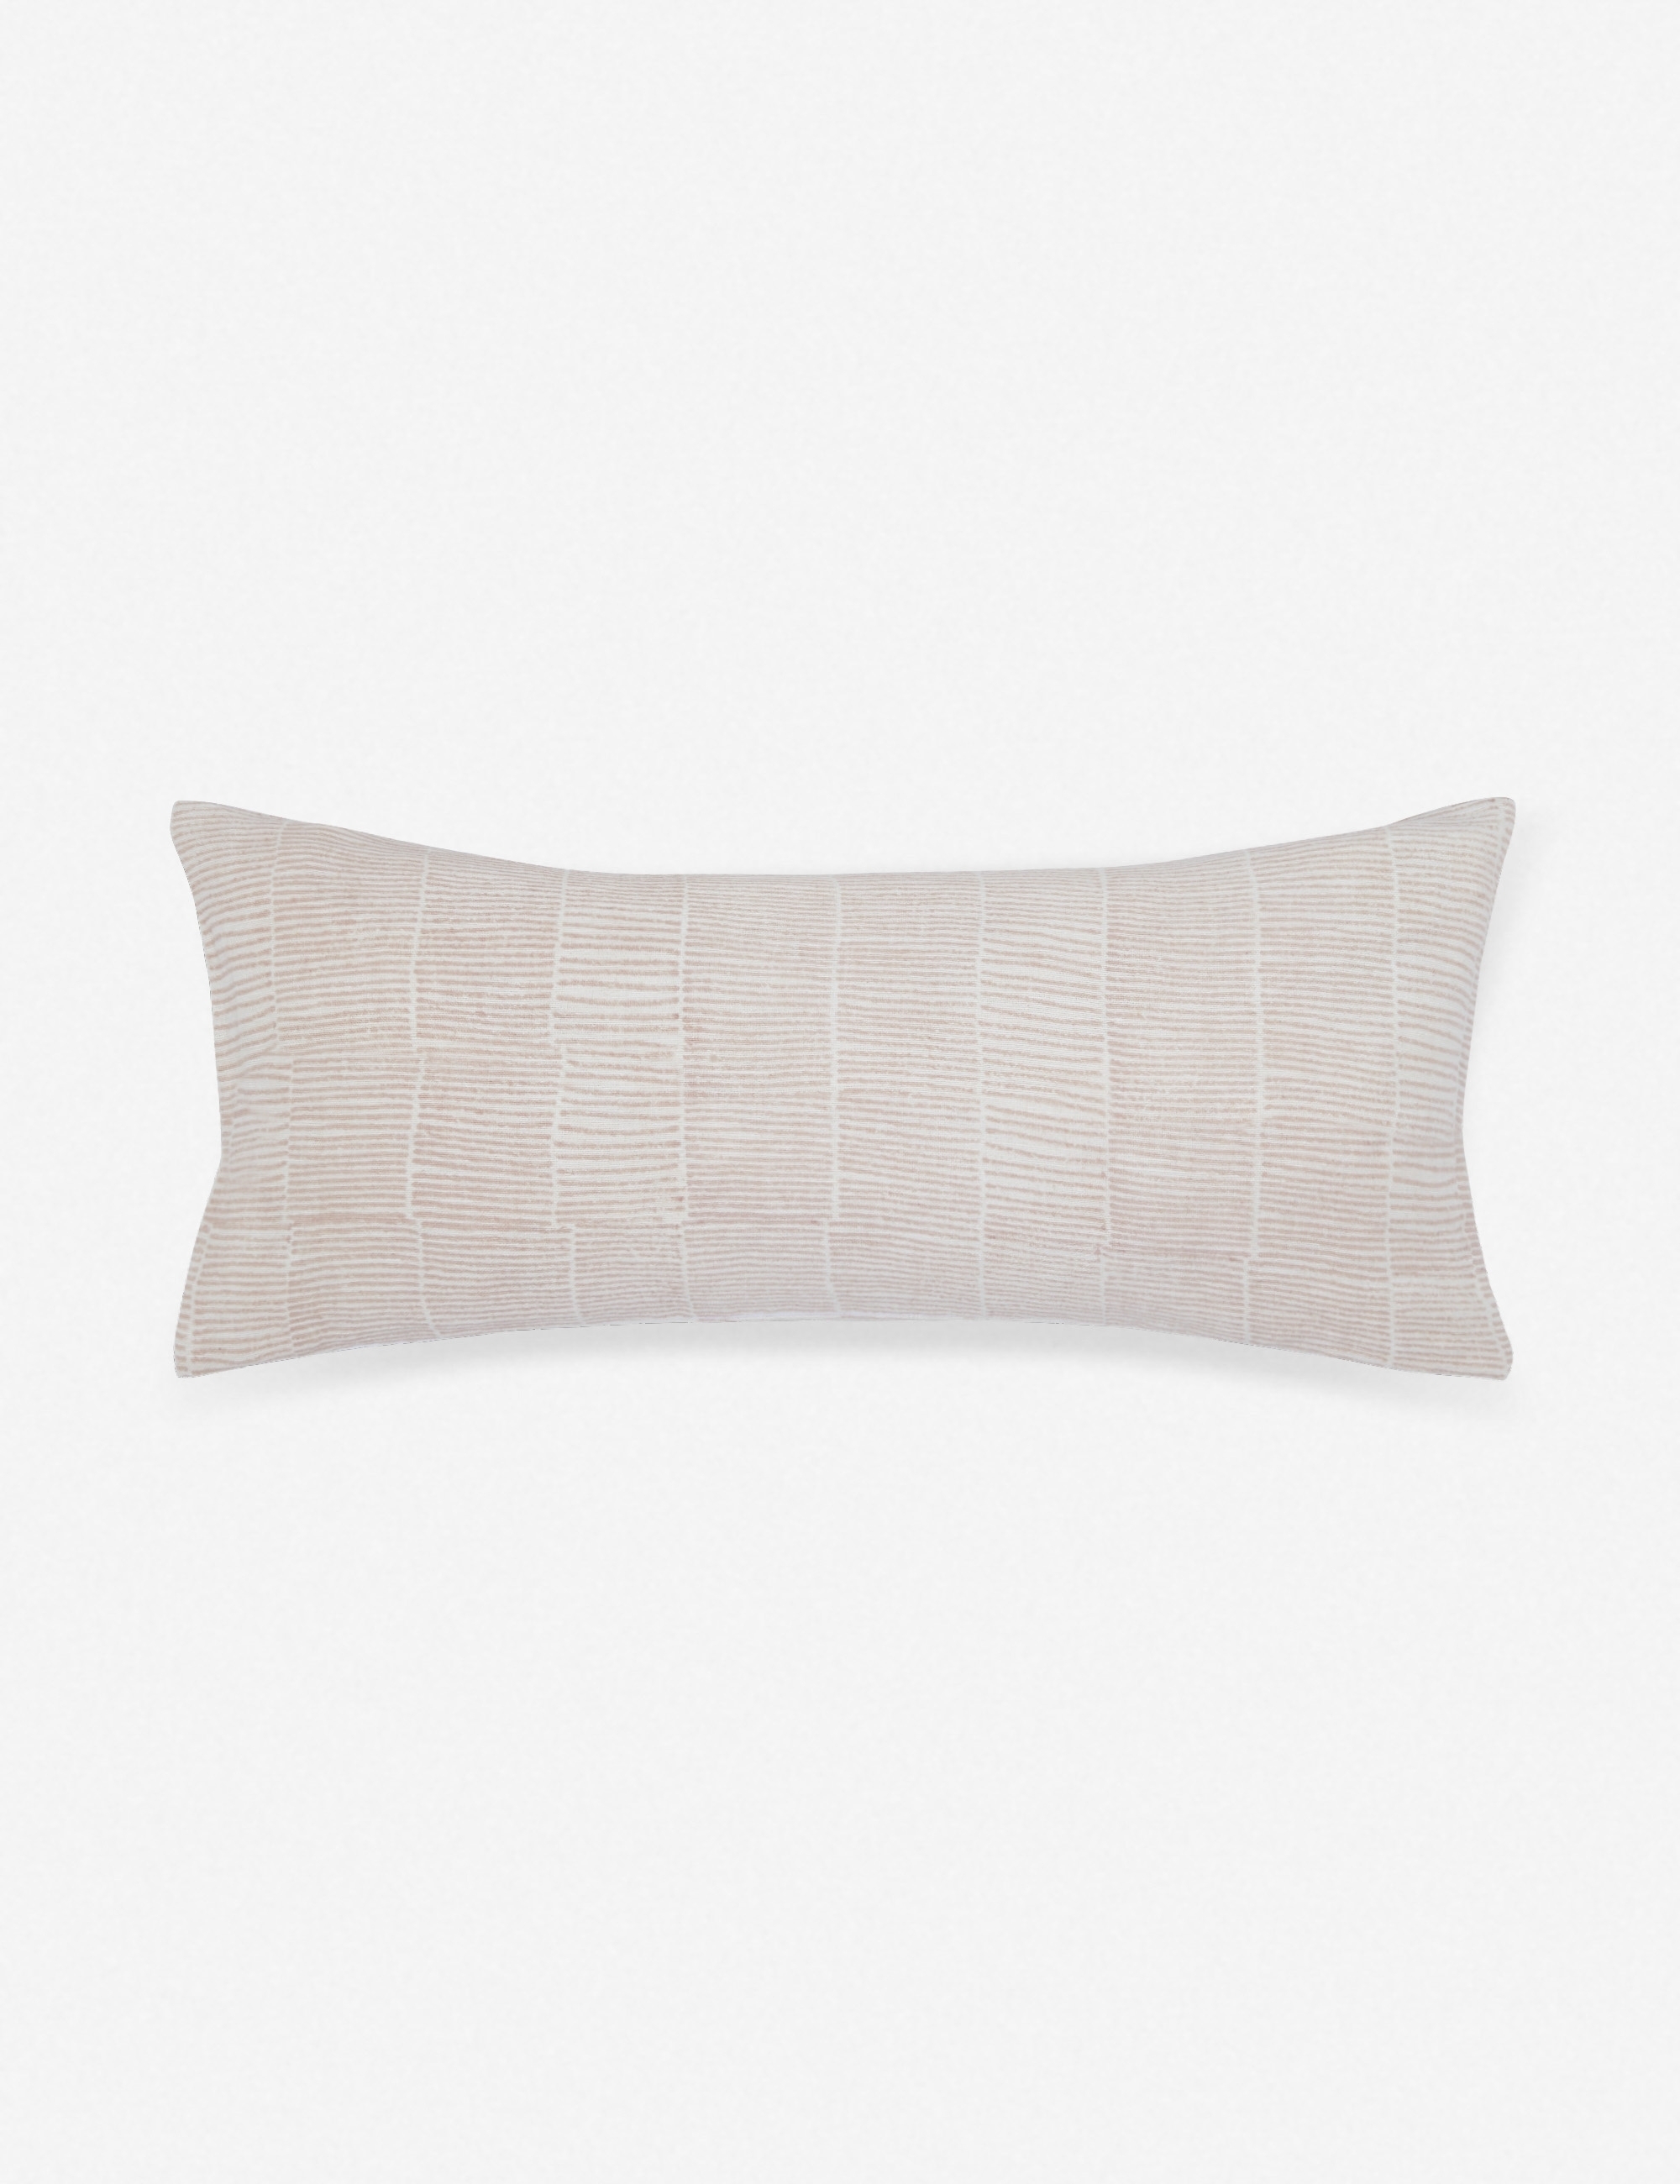 Claudette Long Lumbar Pillow, Blush - Image 1